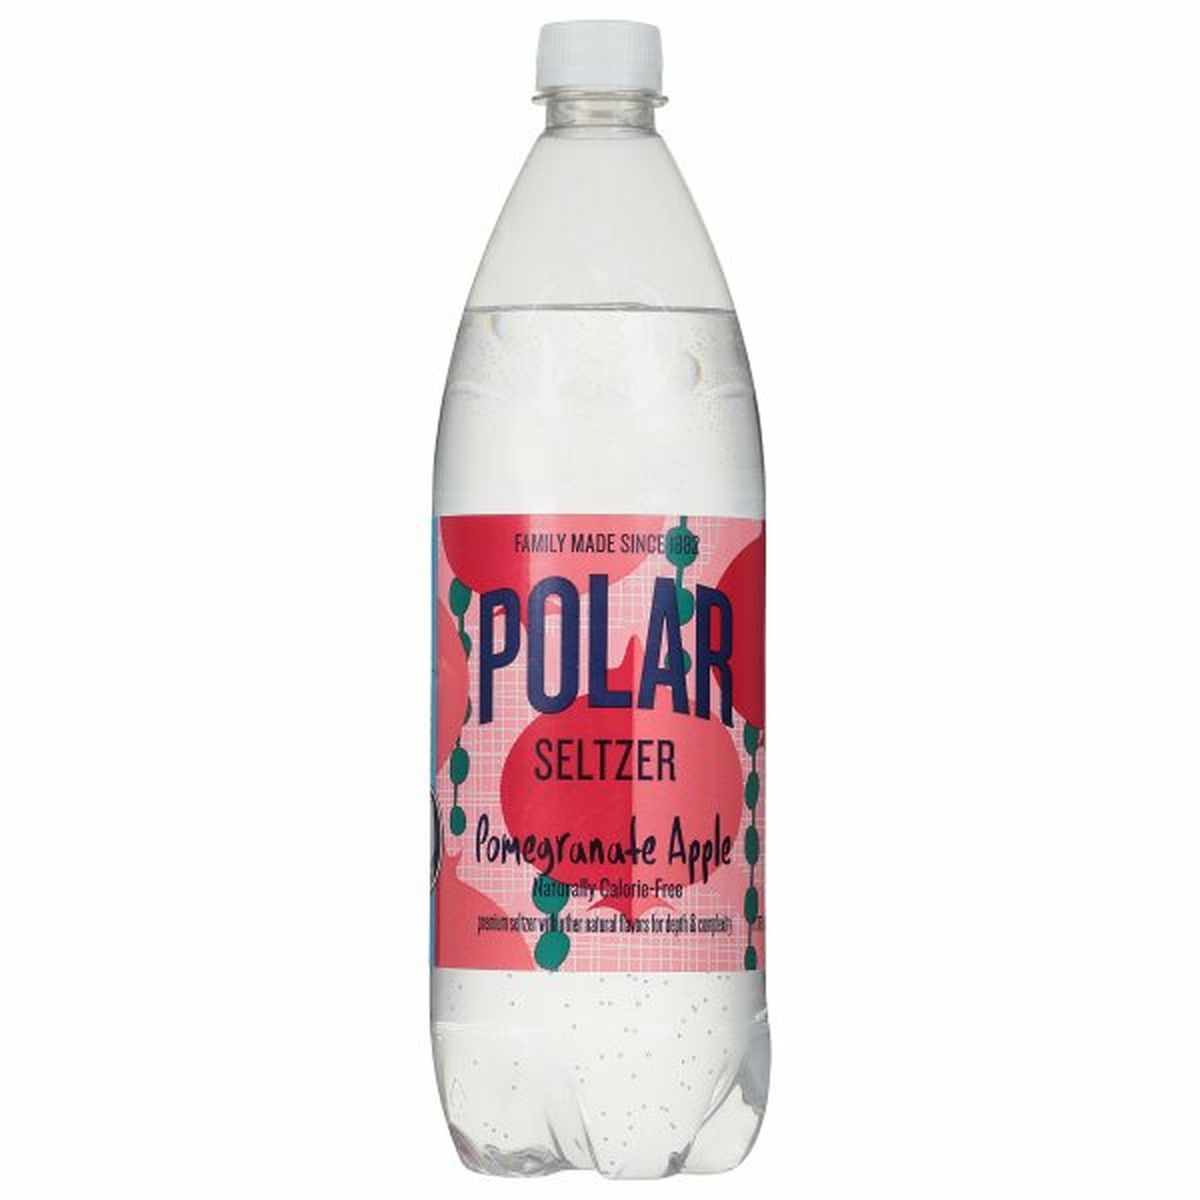 Calories in Polar Seltzer, Pomegranate Apple, Winter